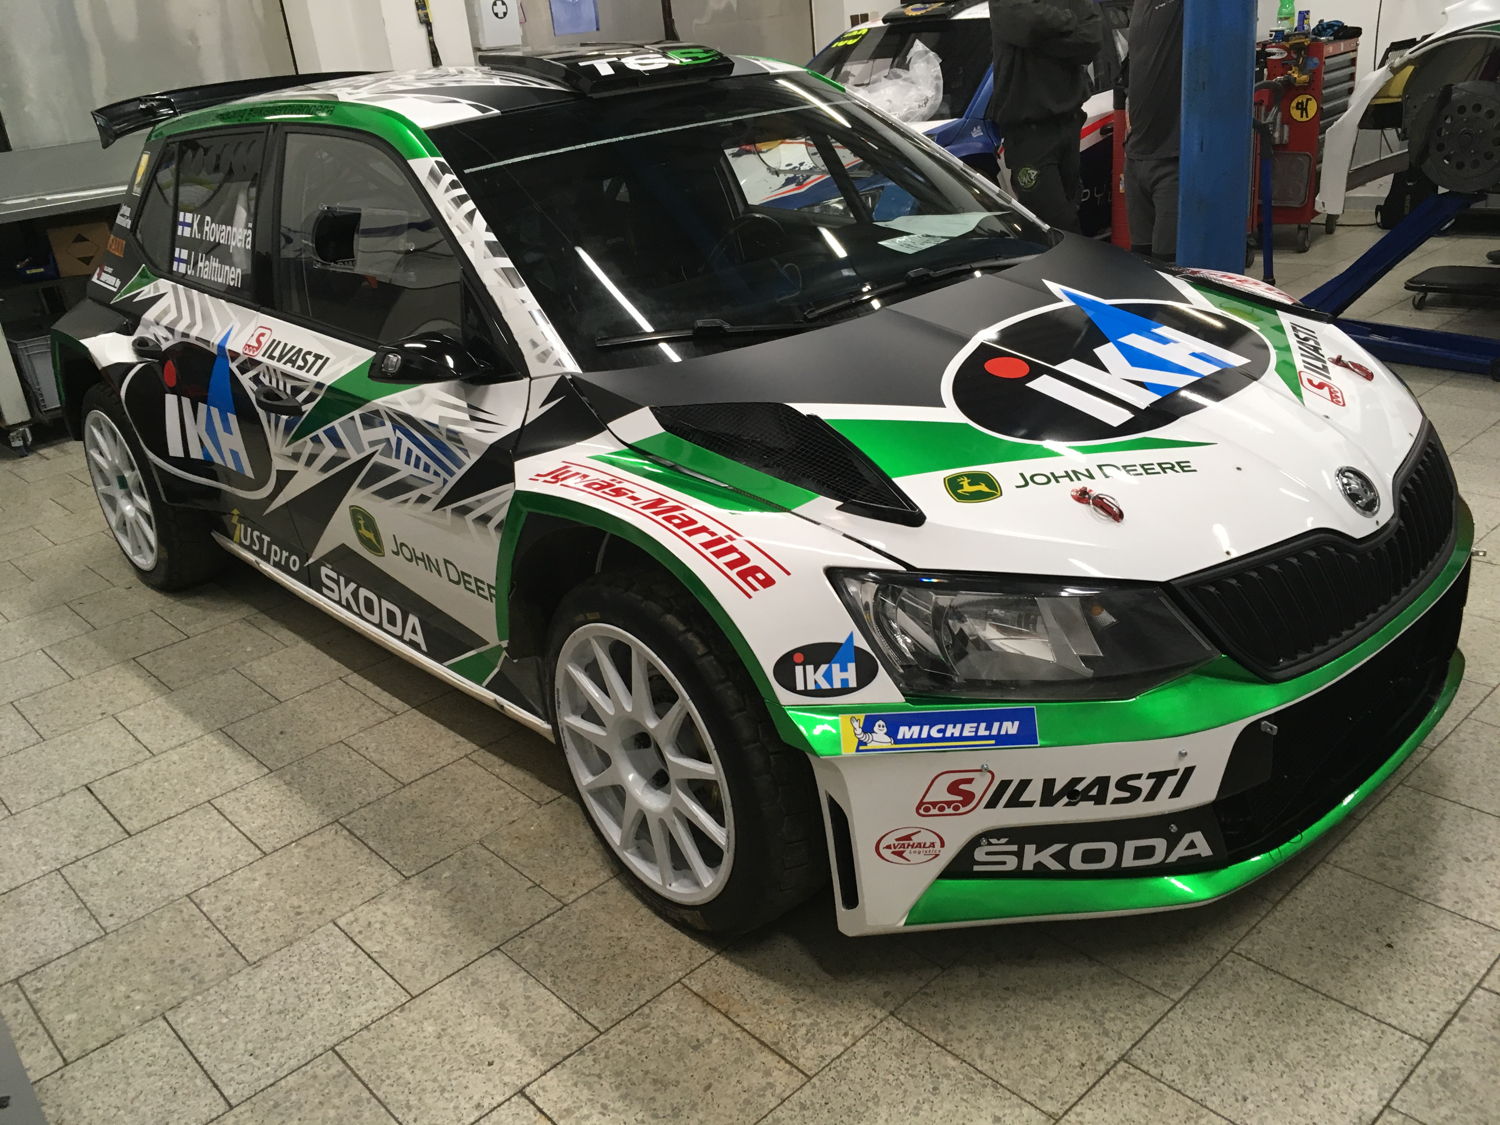 ŠKODA Motorsport works crew Kalle Rovanperä/Jonne
Halttunen (ŠKODA FABIA R5) aims for a class win at the
upcoming Rallye Monte Carlo.